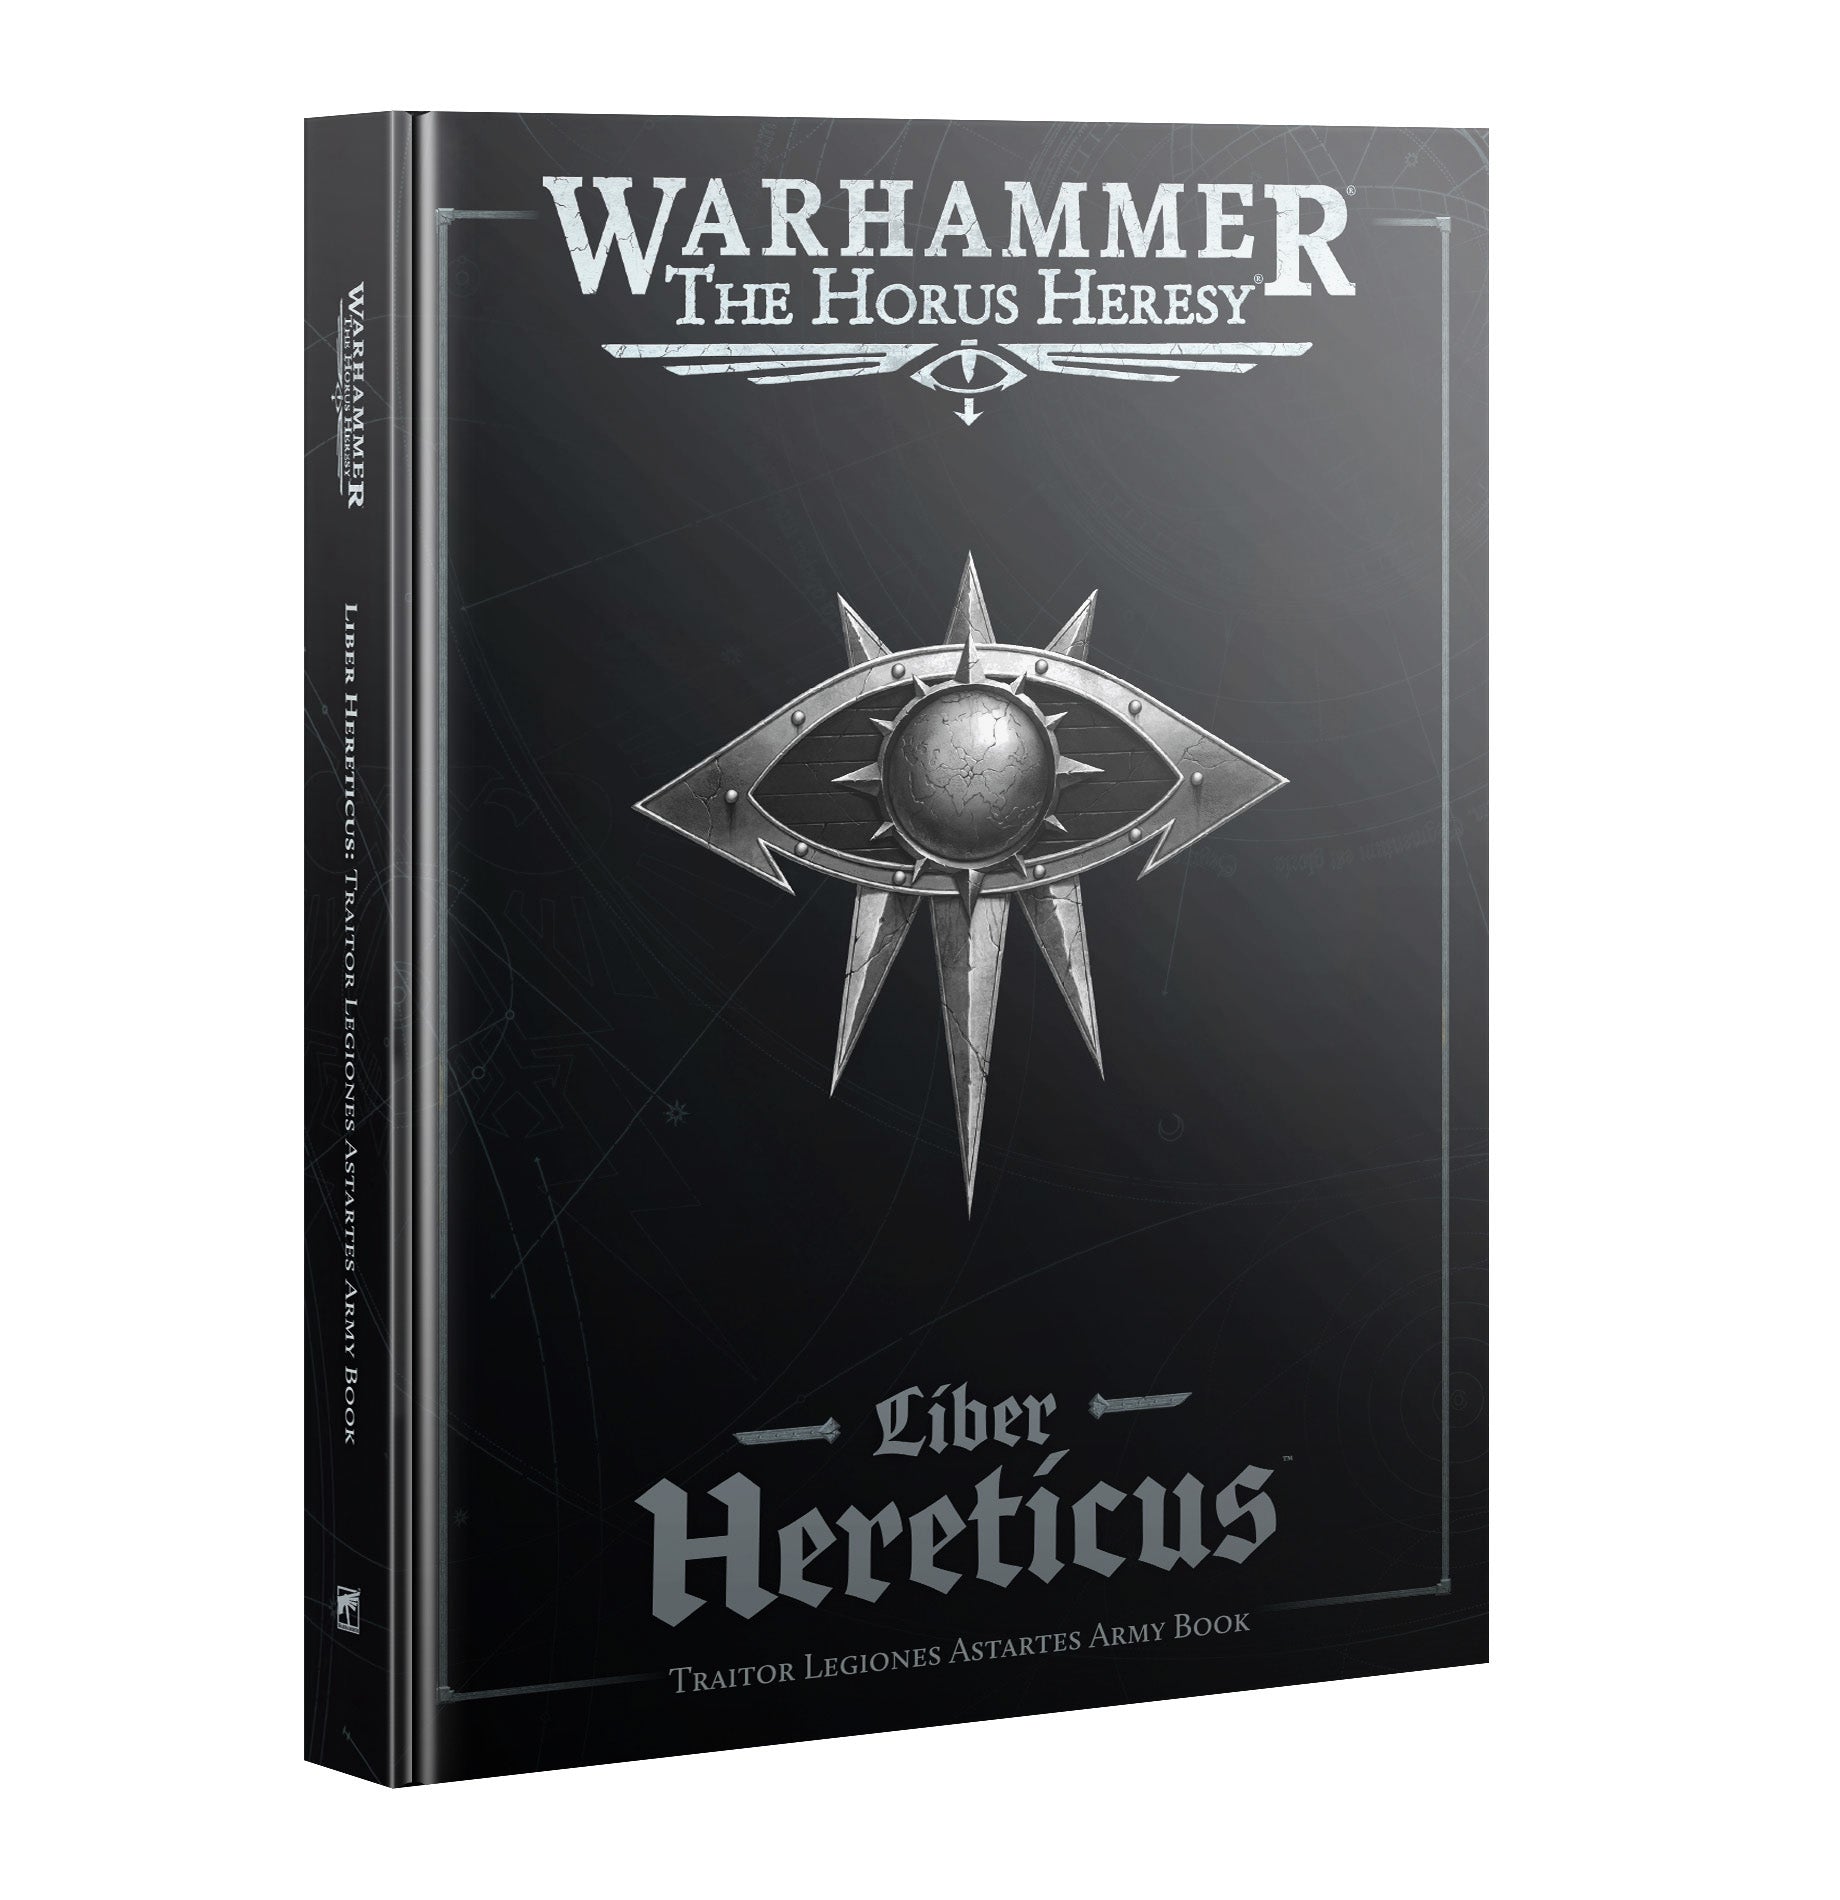 Warhammer Horus Heresy: Liber Hereticus Traitor Legiones Army Book